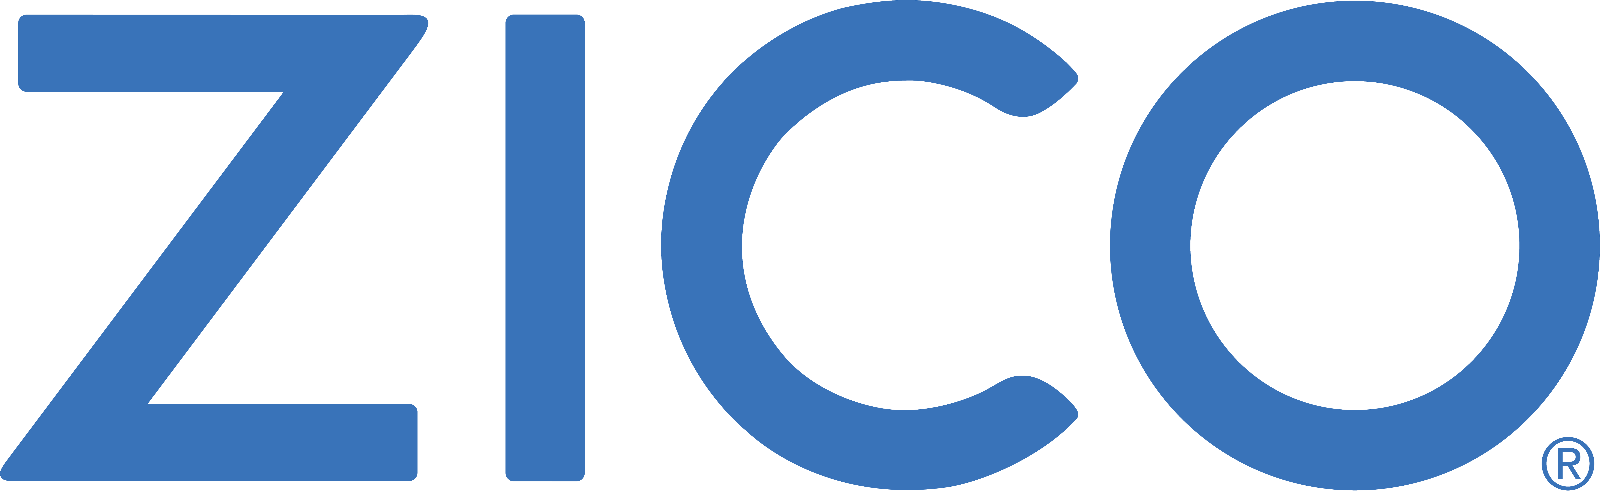 Zico logo